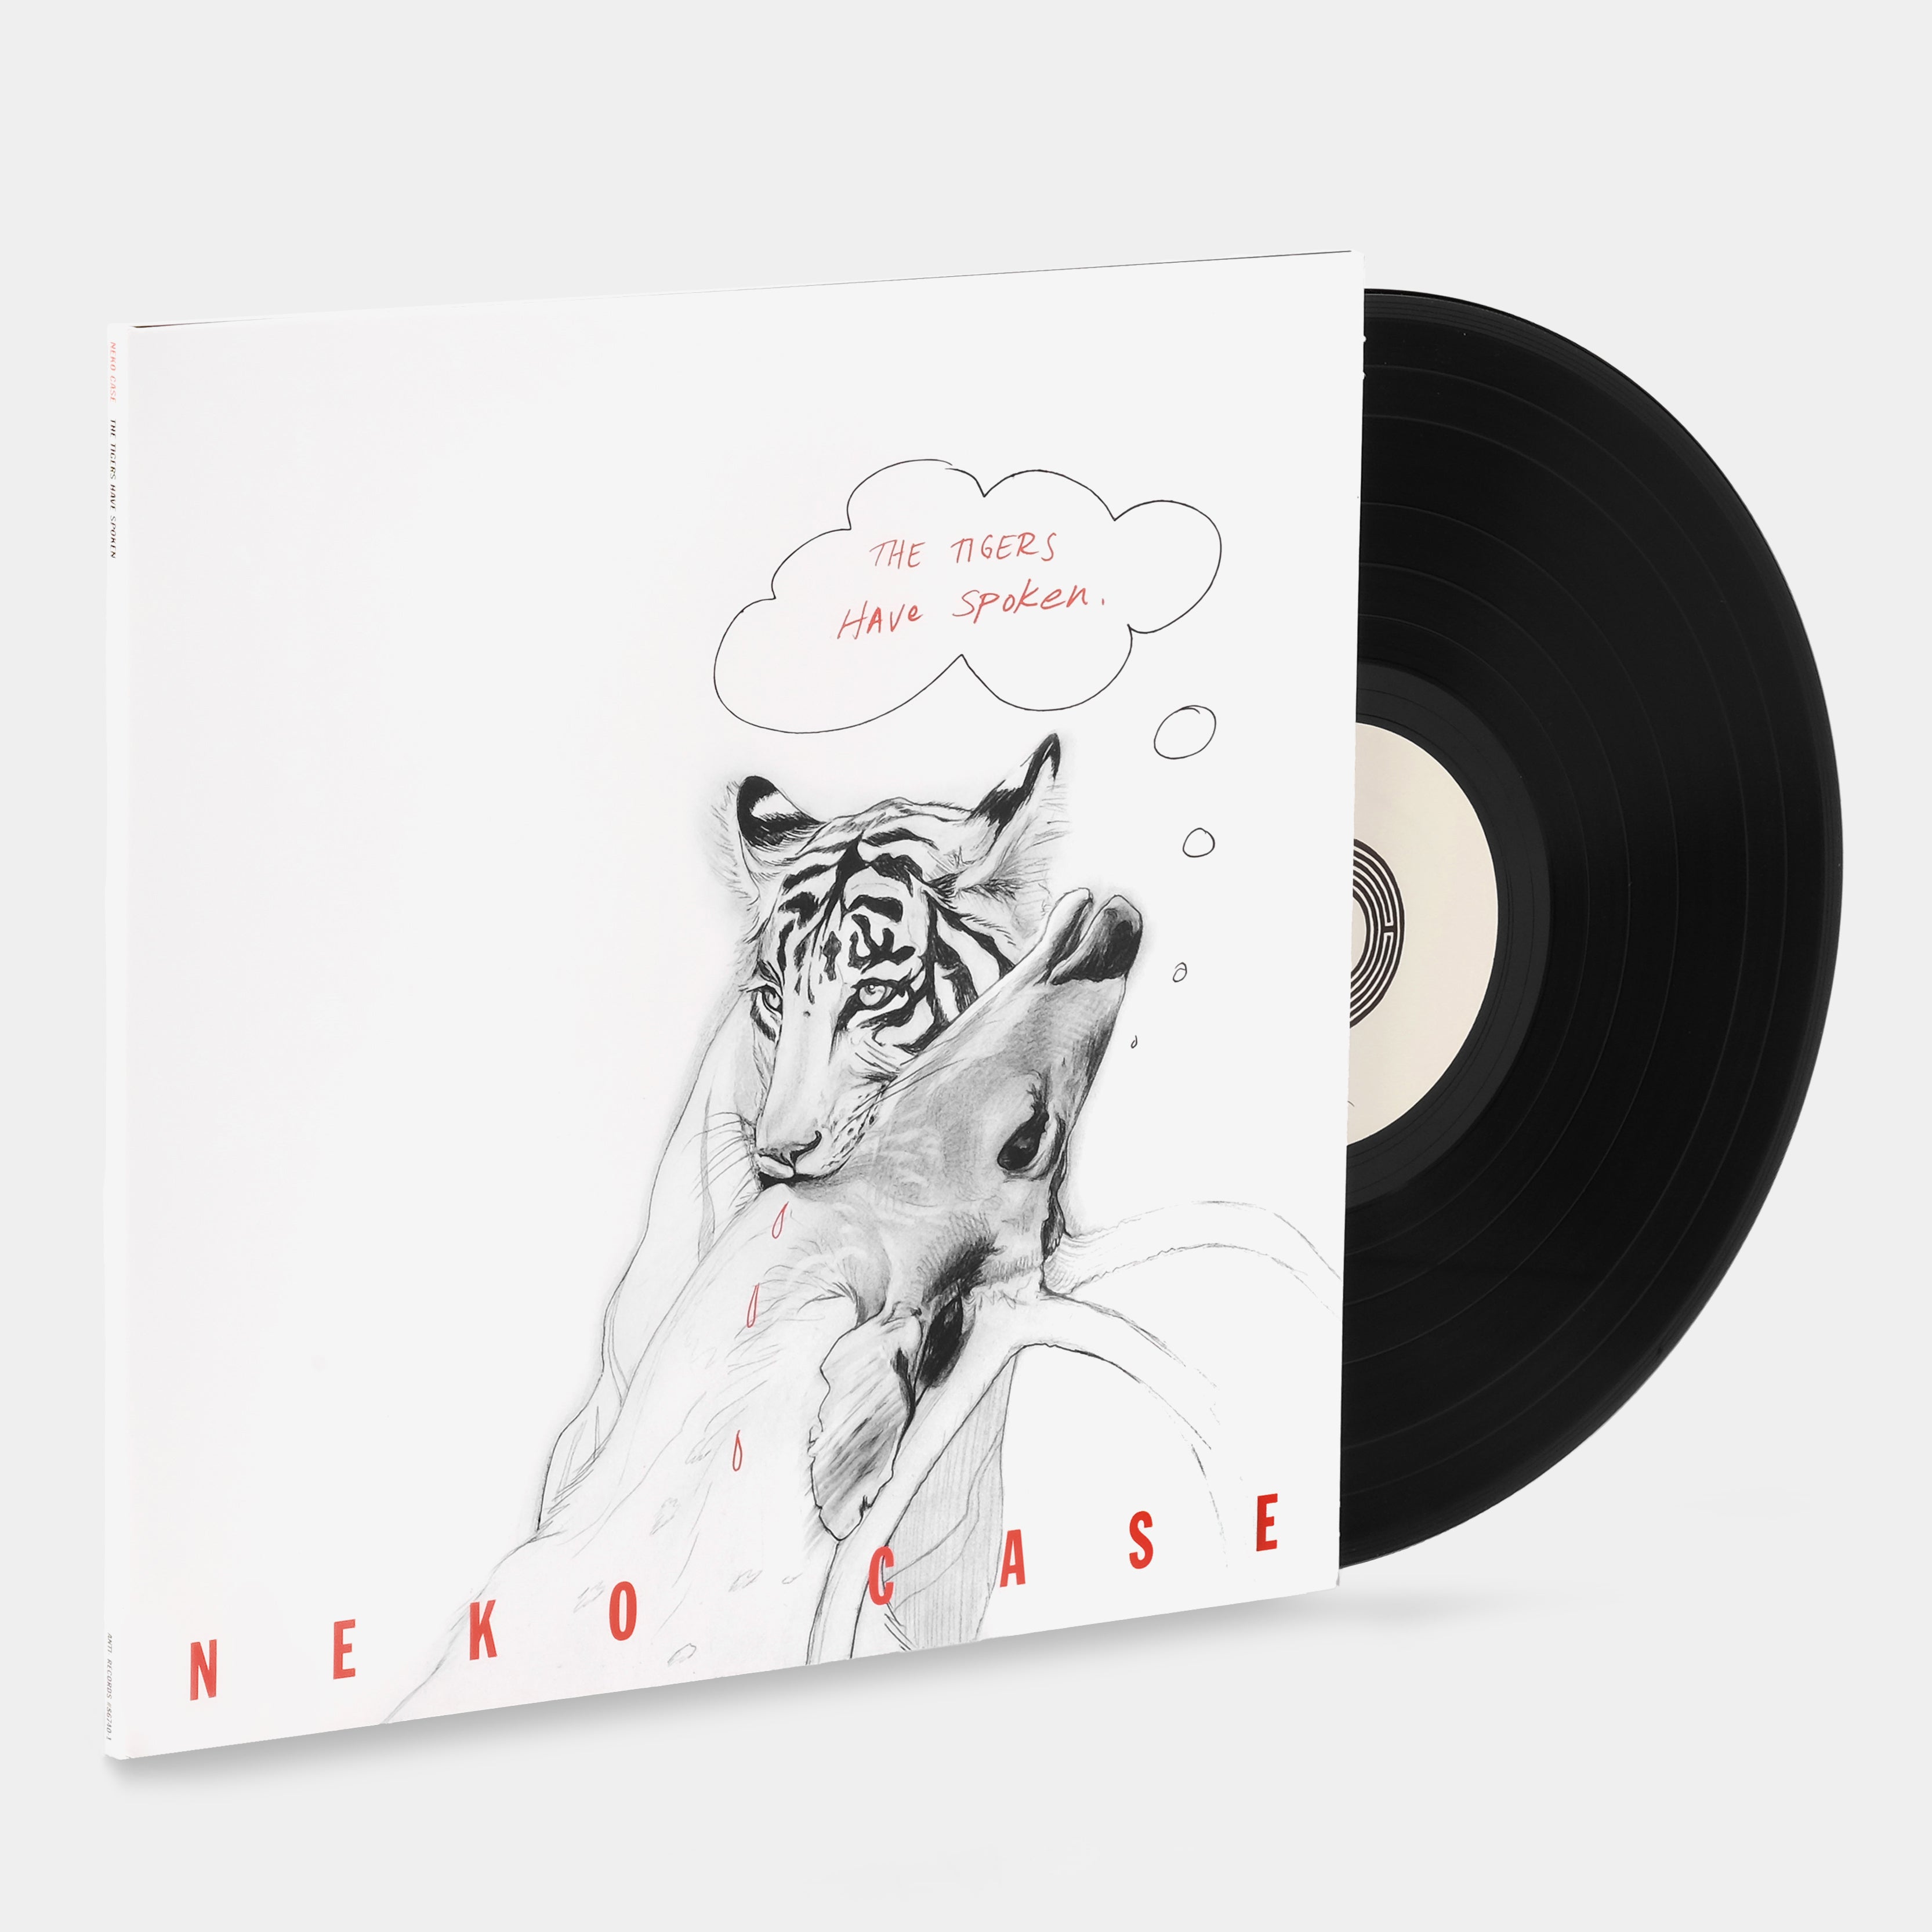 Neko Case - The Tigers Have Spoken LP Vinyl Record